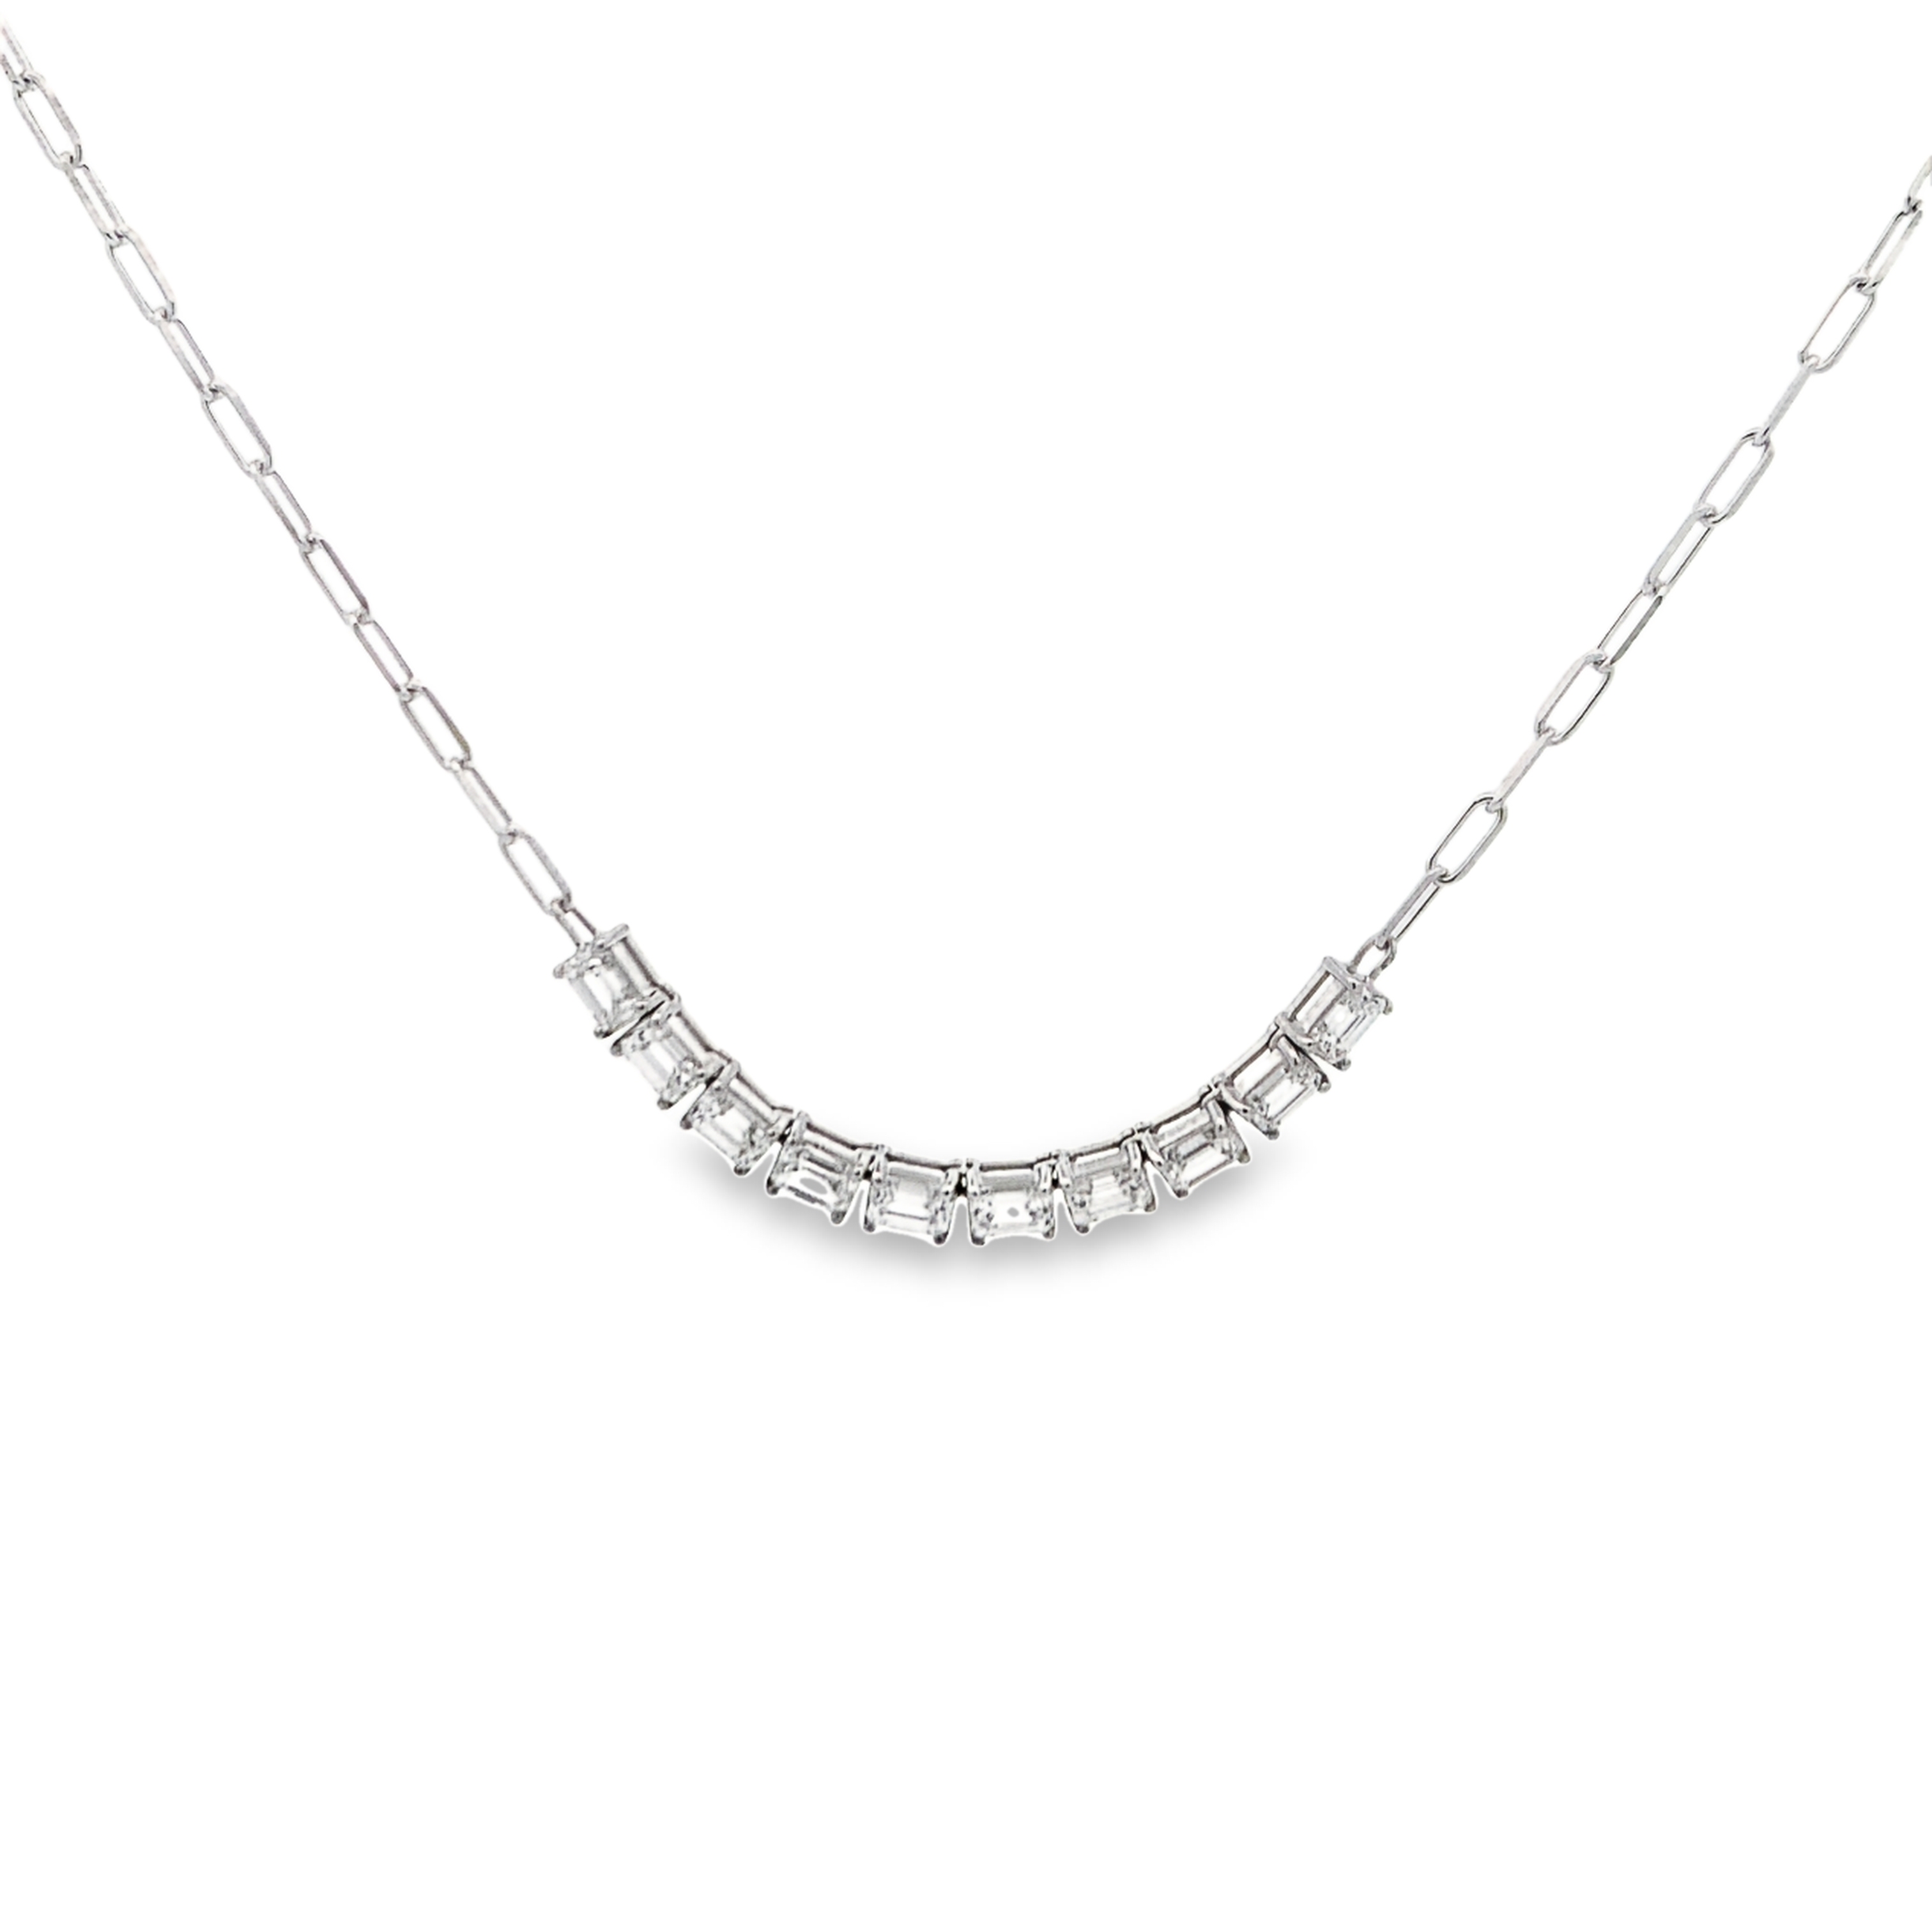 Norman Silverman 18K White Gold Floating Emerald Cut Diamond Necklace